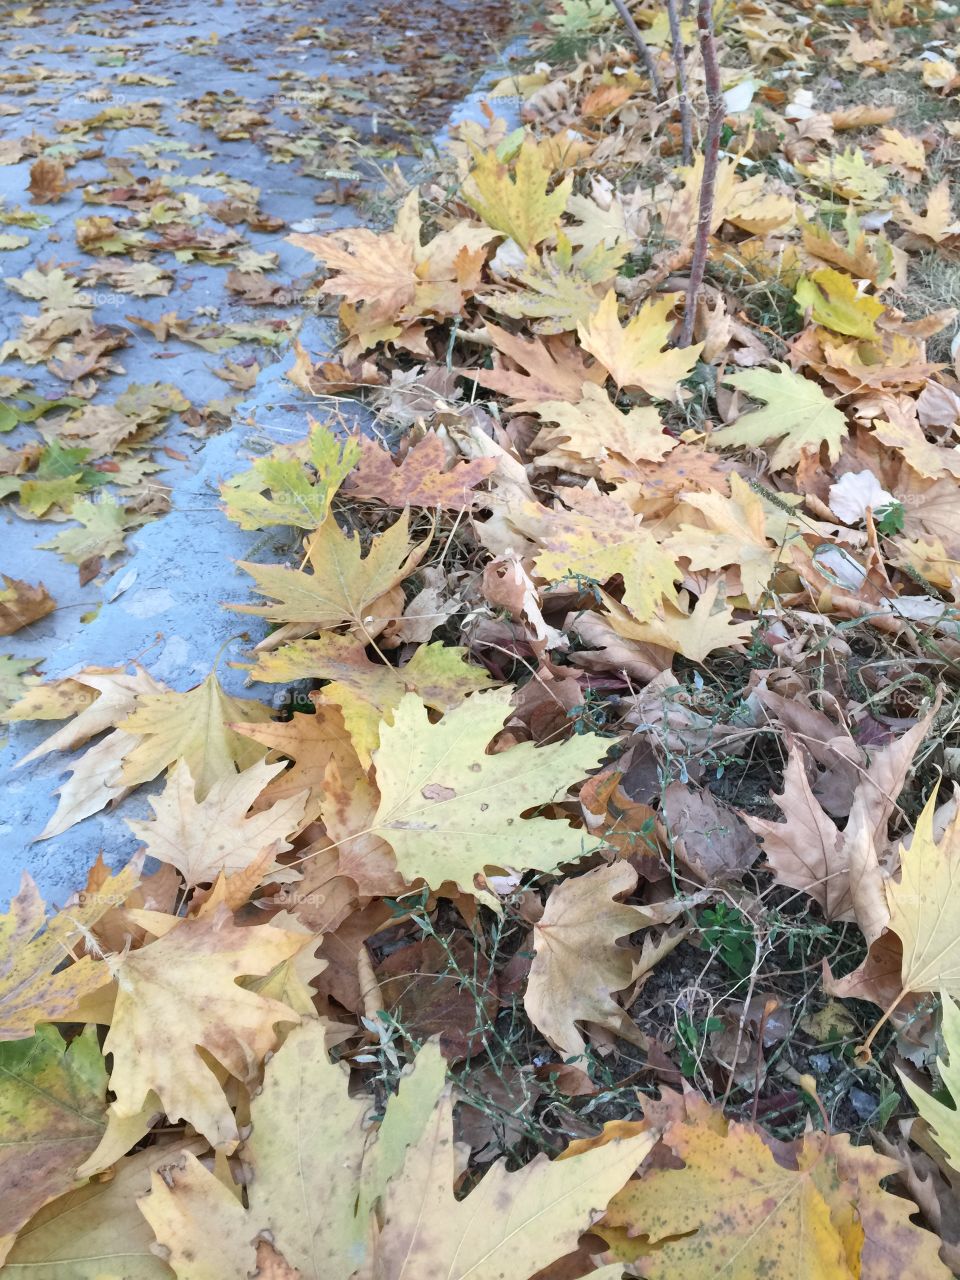 Leaves in fall